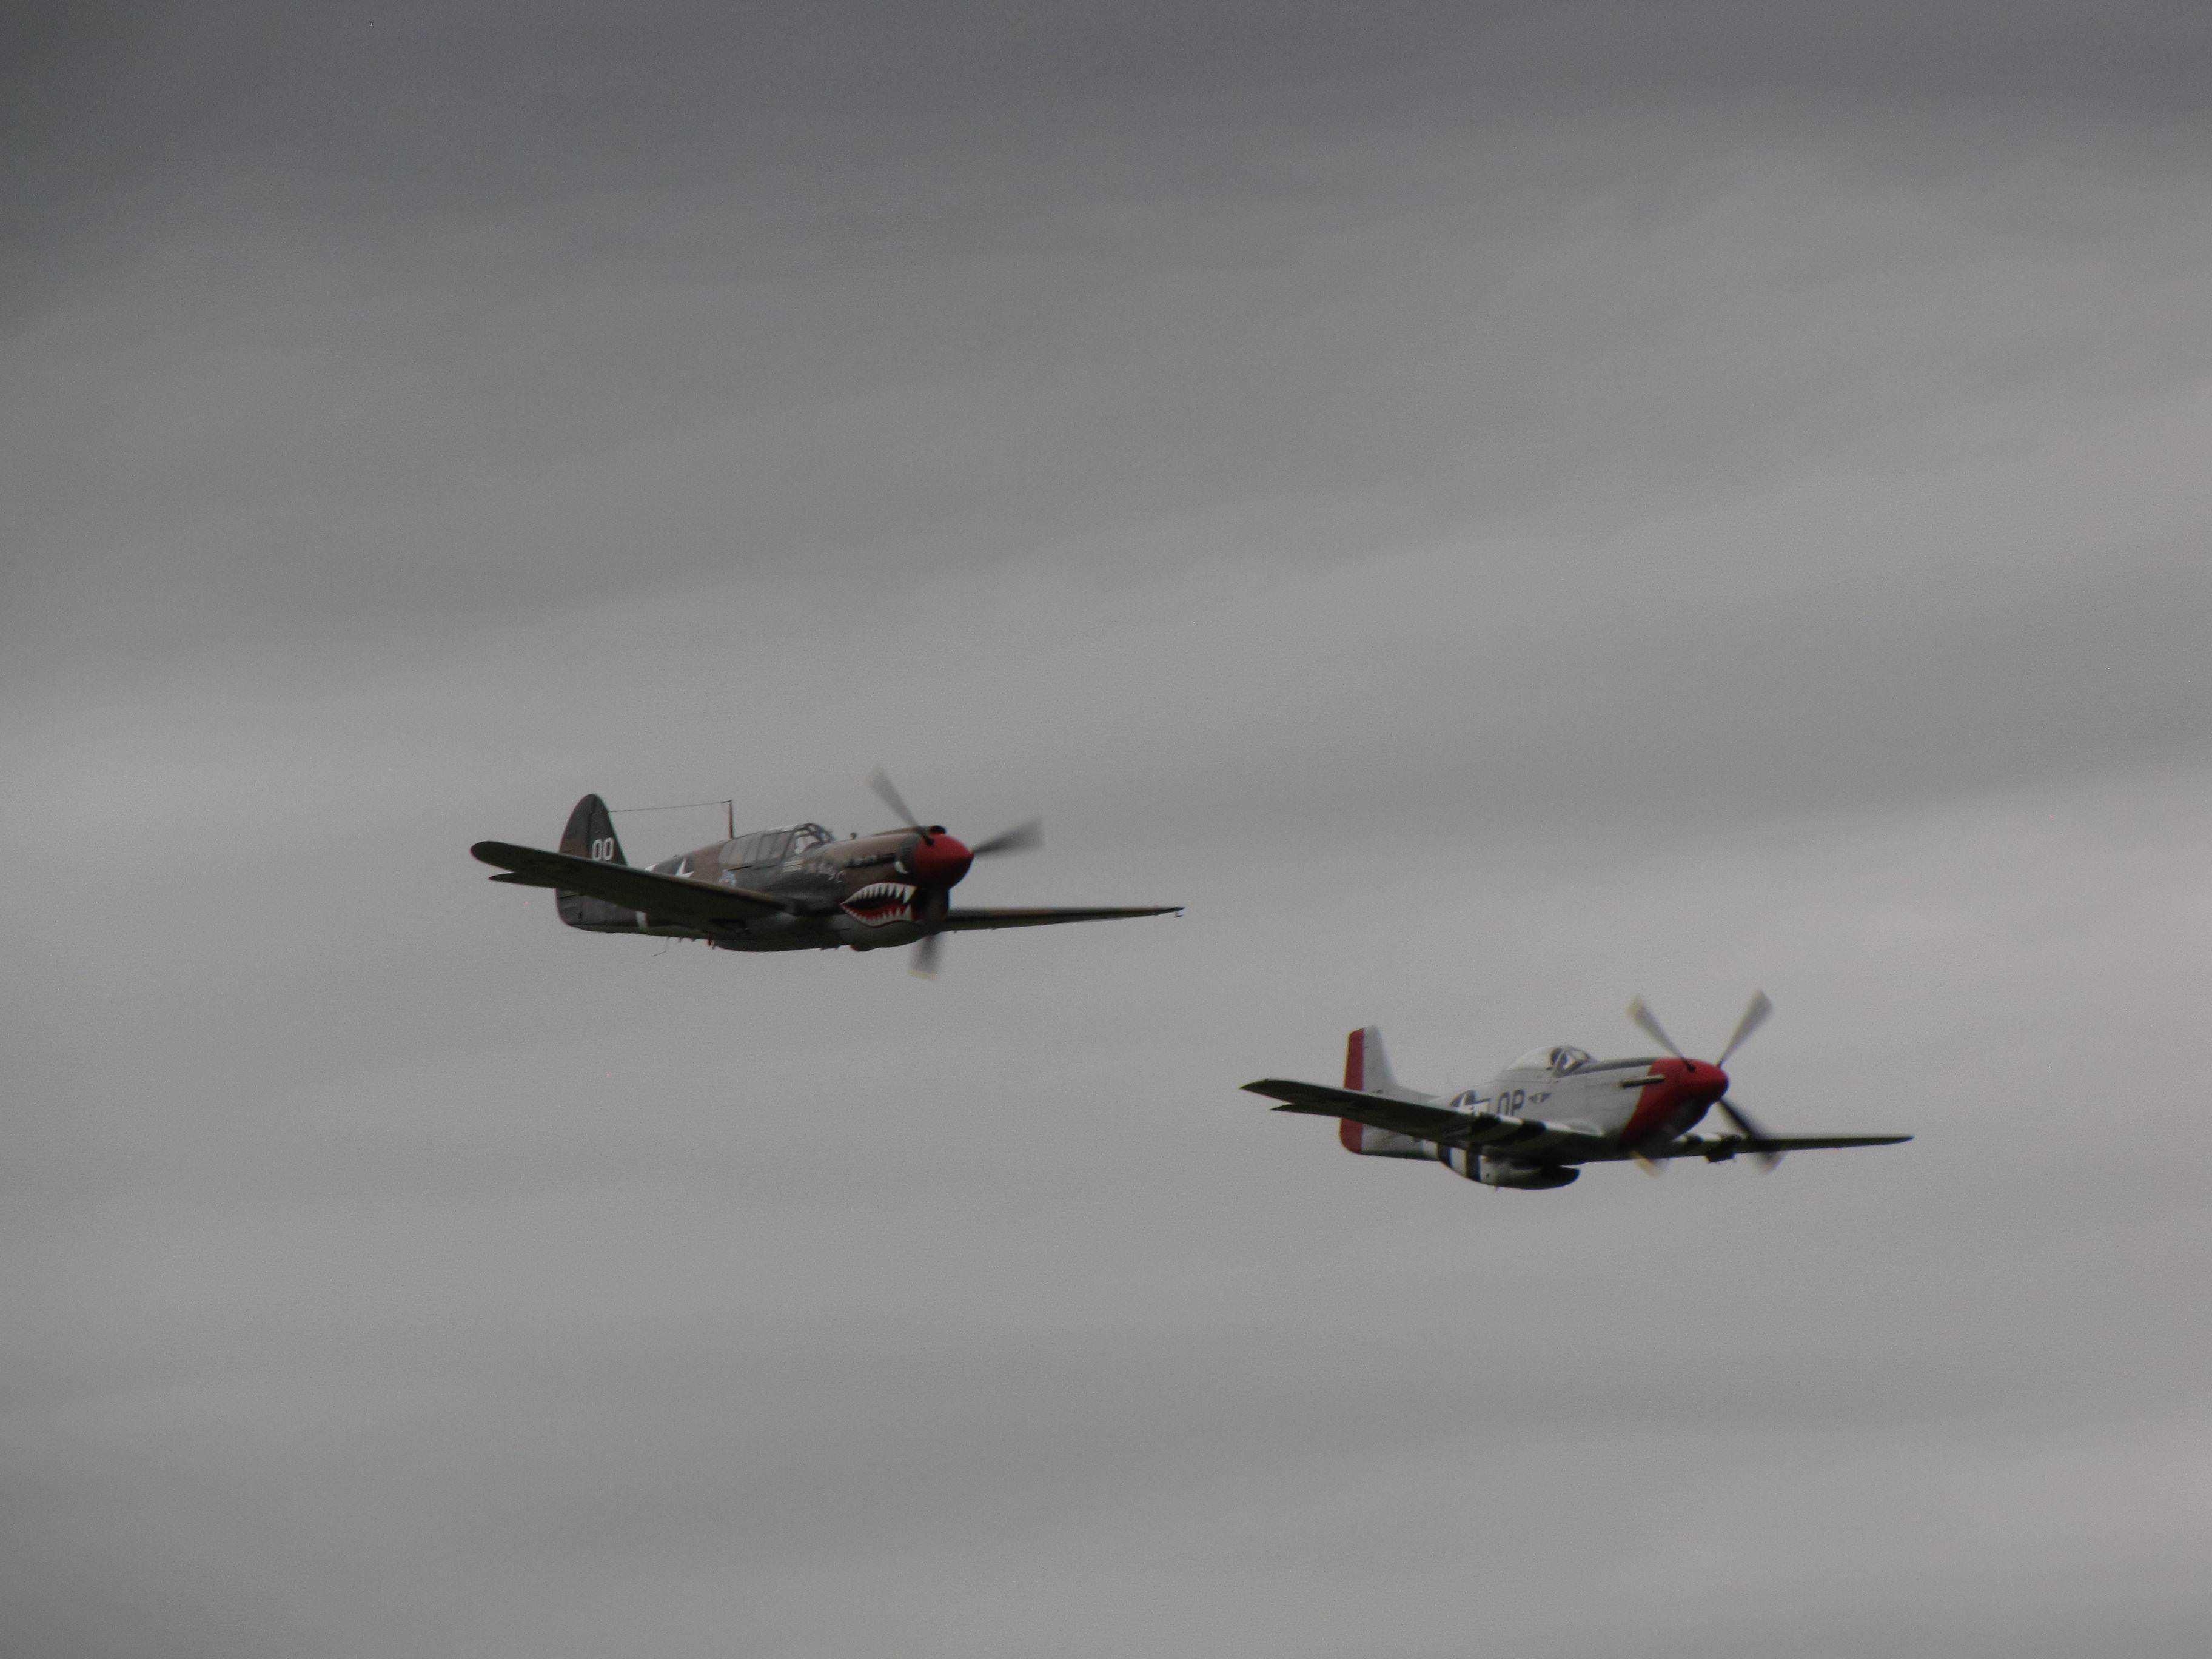 P-40 Kittyhawk and P-51 Mustang fighters in flight, Reading Regional Airport, Pennsylvania, United States, 3 Jun 2018